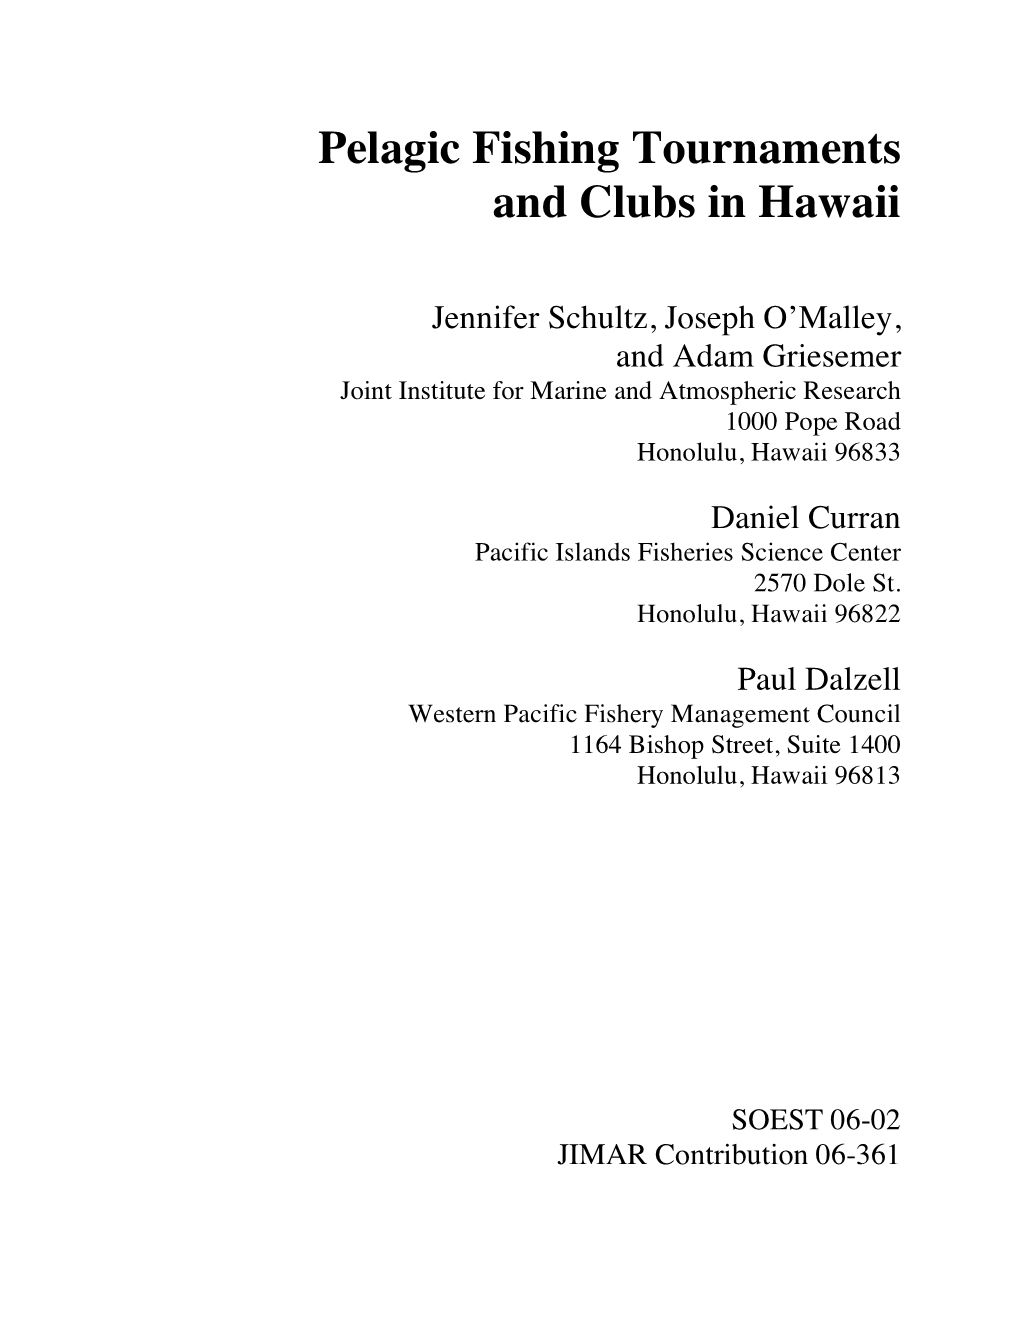 Pelagic Fishing Tournaments and Clubs in Hawaii